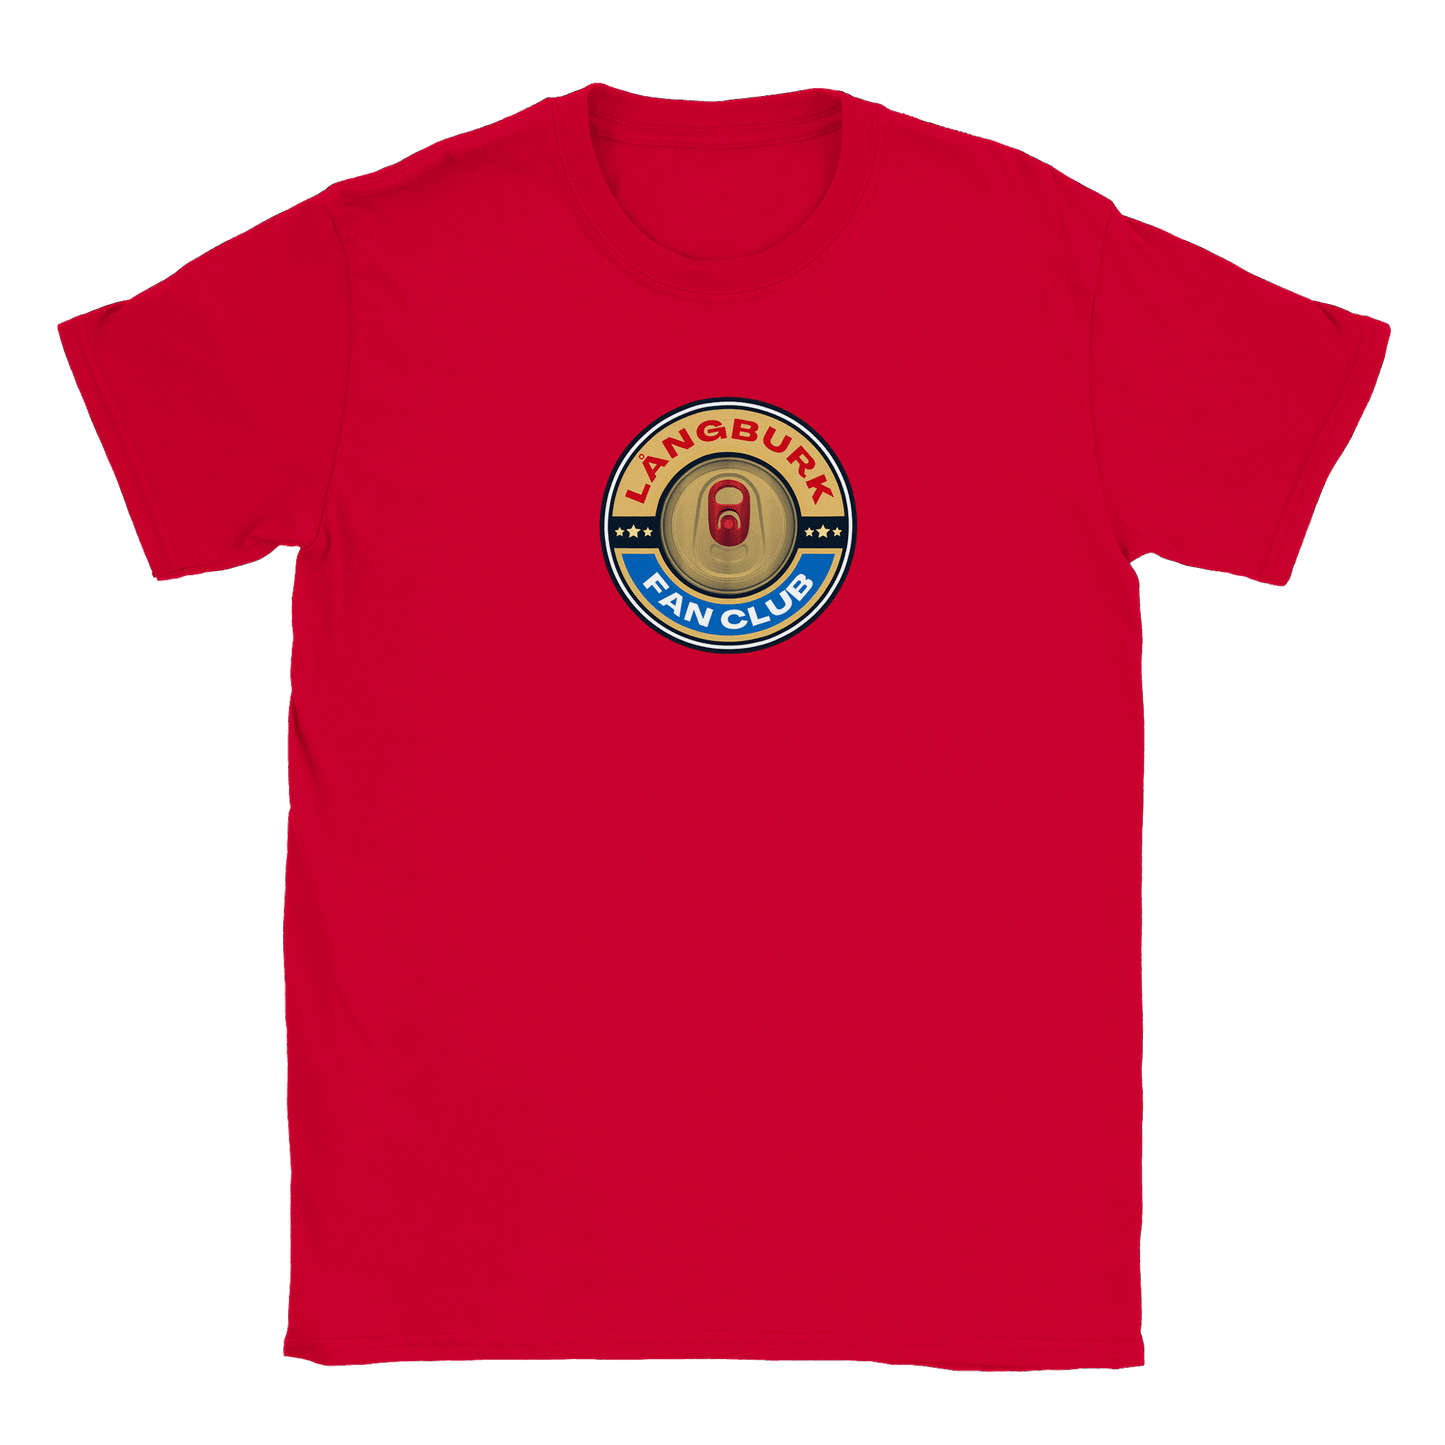 Långburk Fan Club Norrland Edition - T-shirt Röd